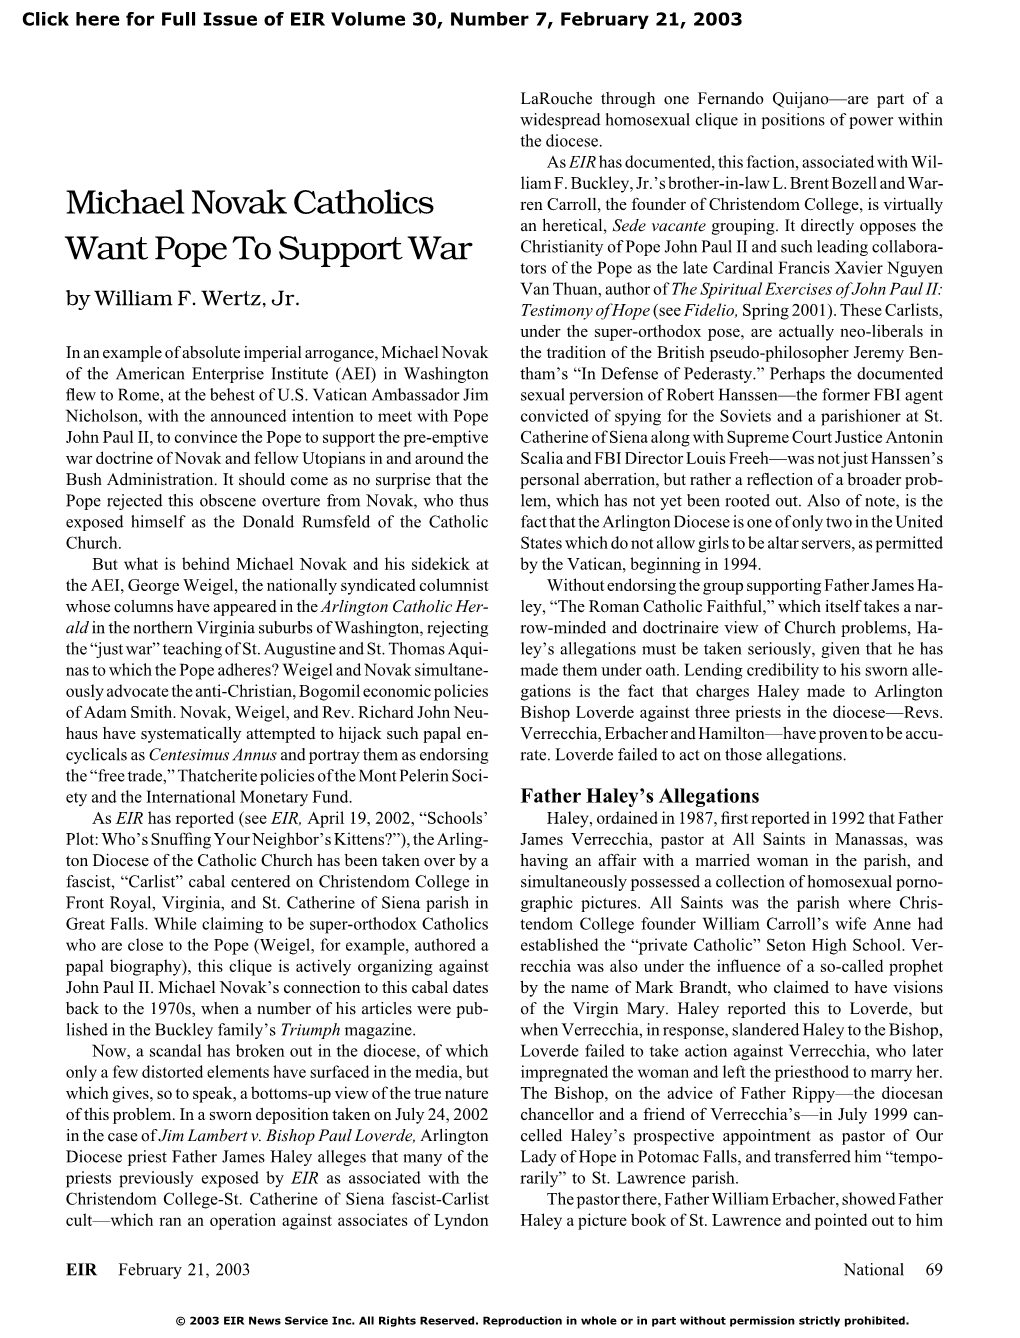 Michael Novak Catholics Want Pope to Support